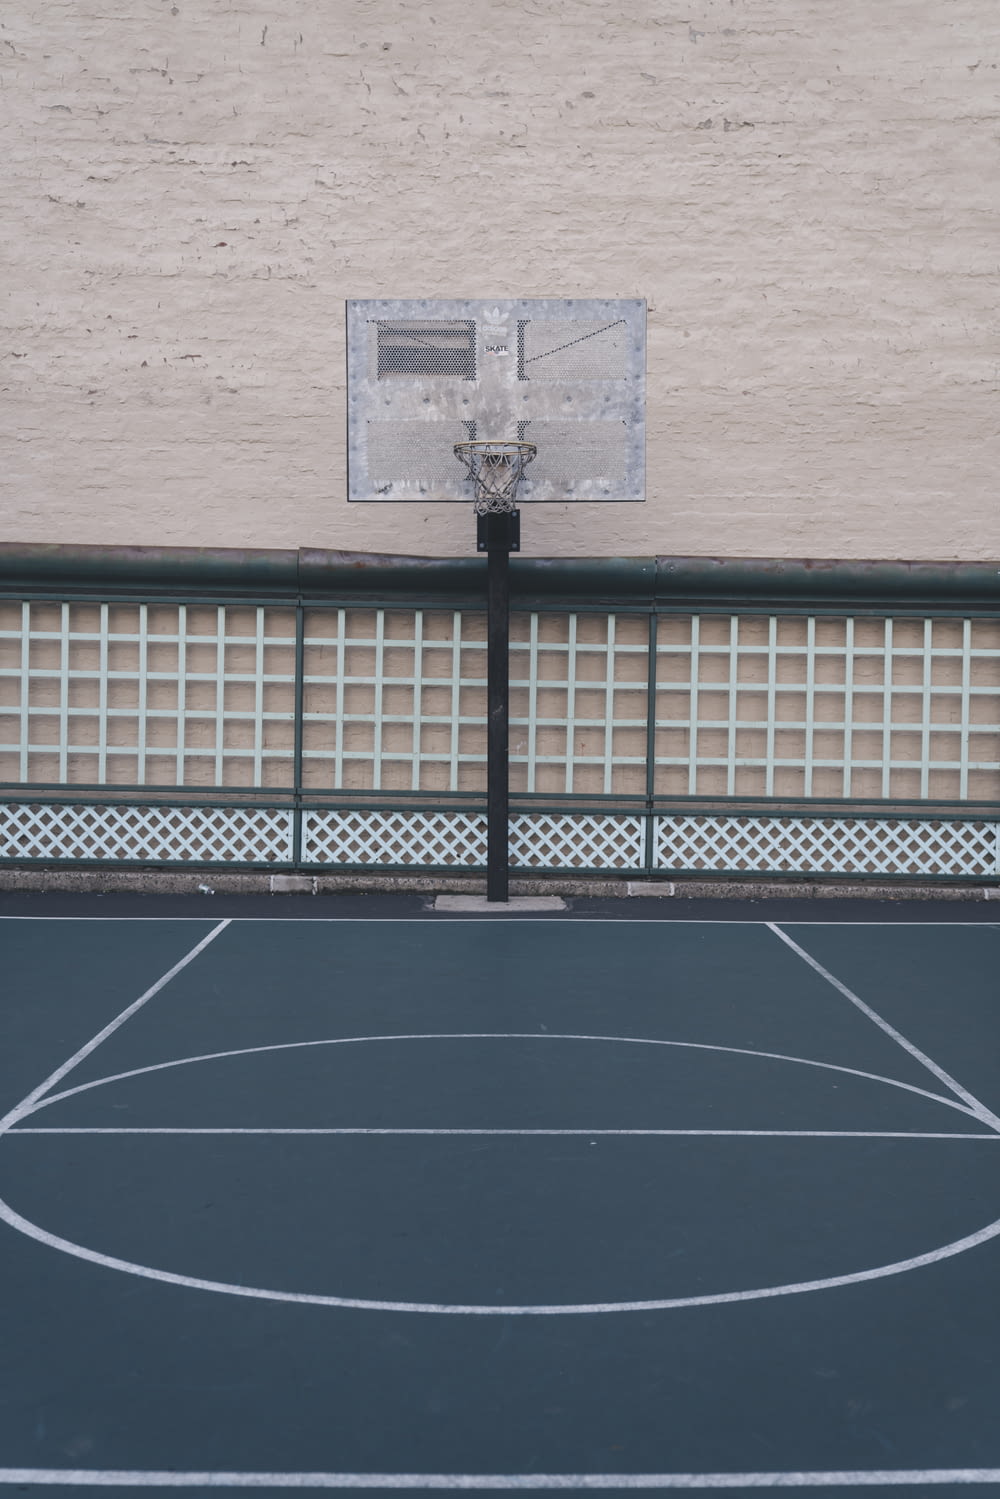 grey basketball court